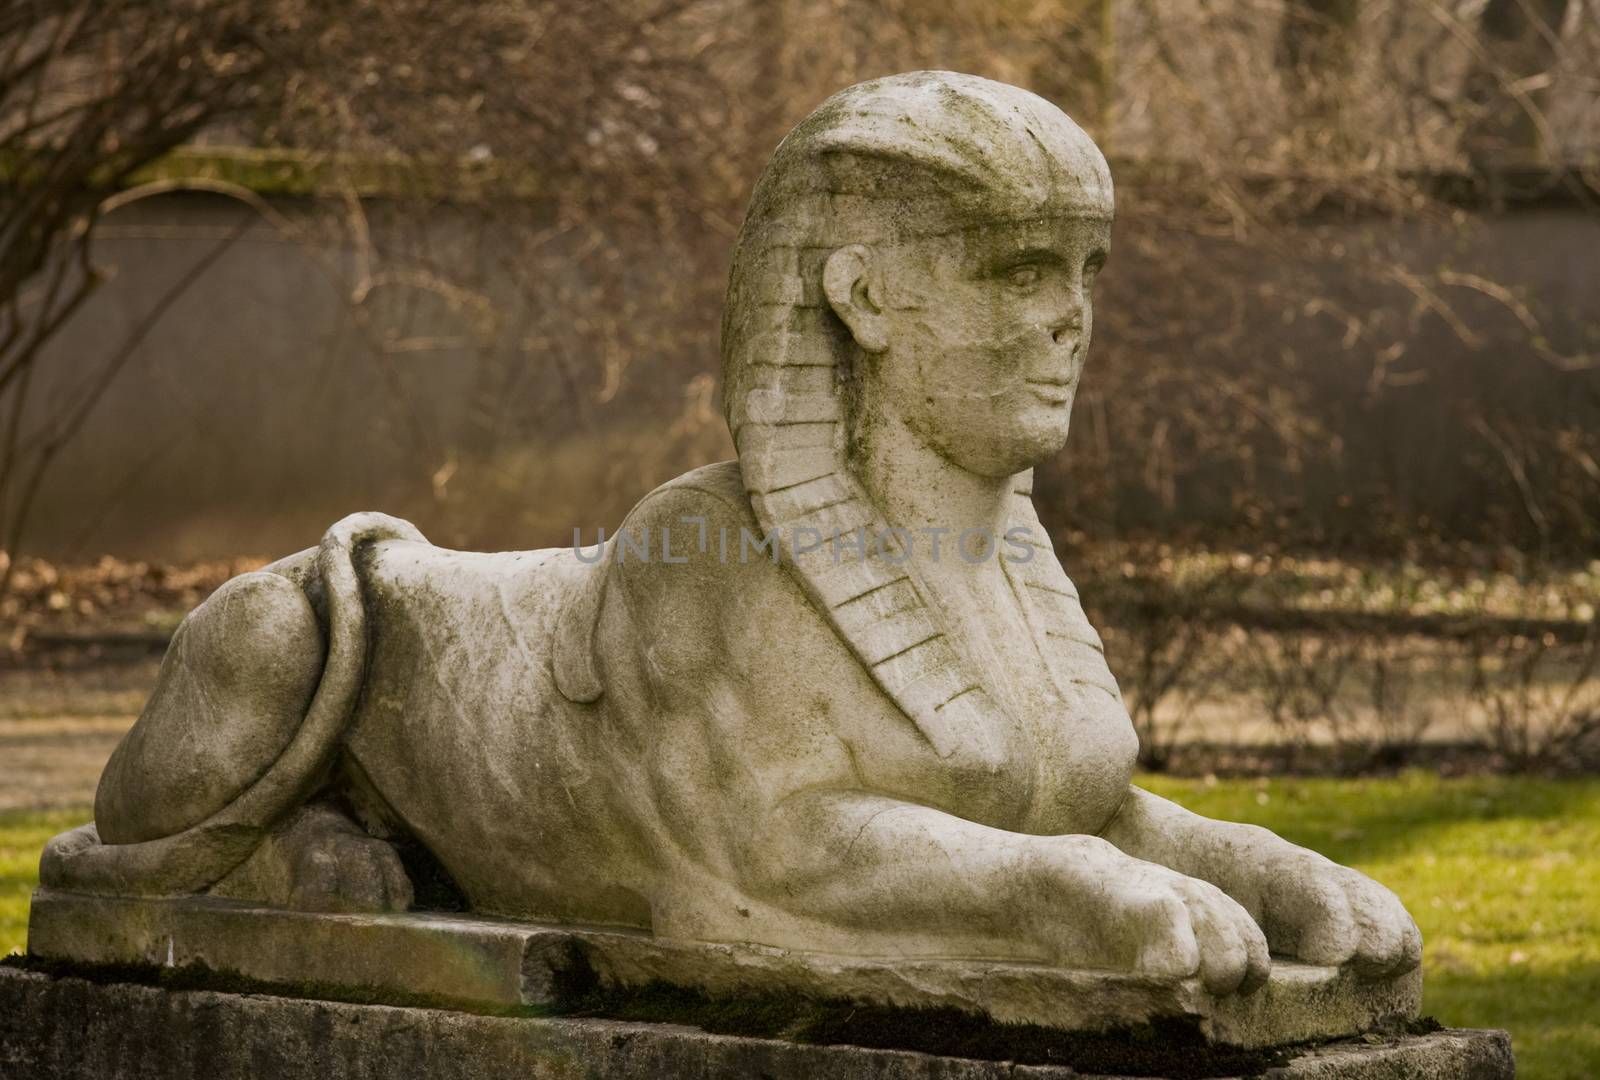 Sculpture of a sphinx in Royal Park in Warsaw by fotoecho